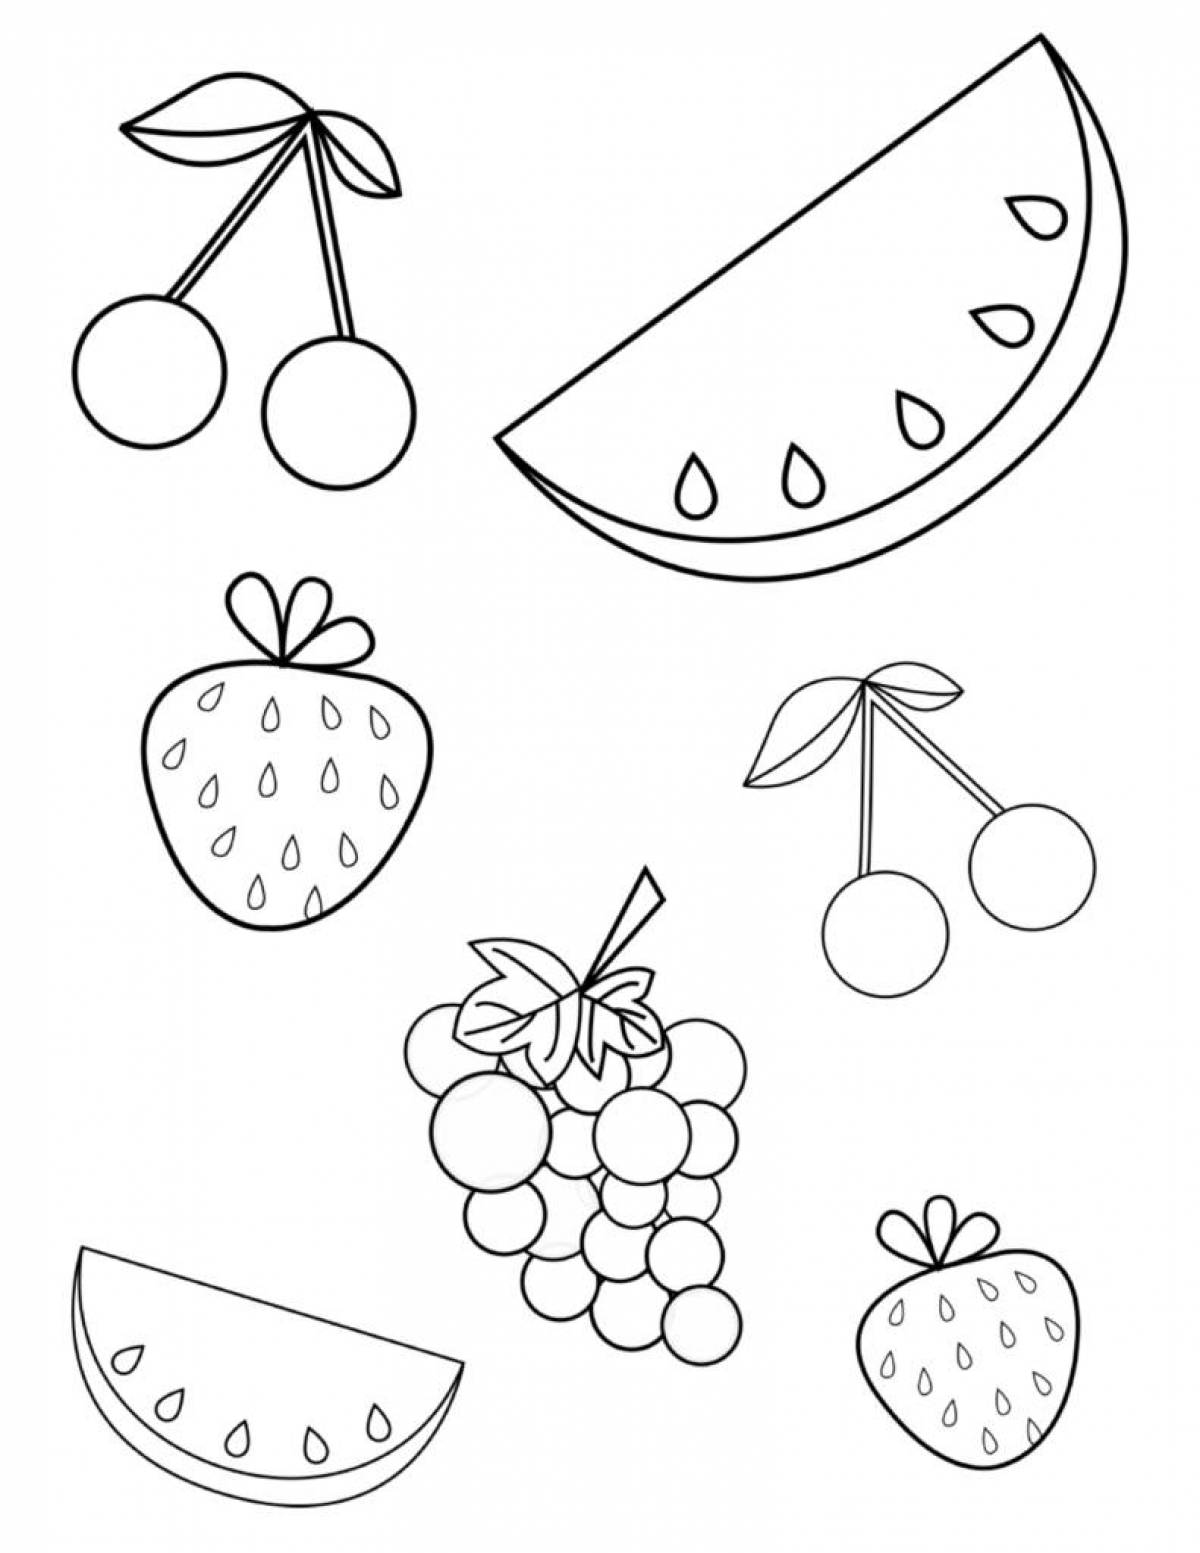 Joyful fruits coloring book for kids